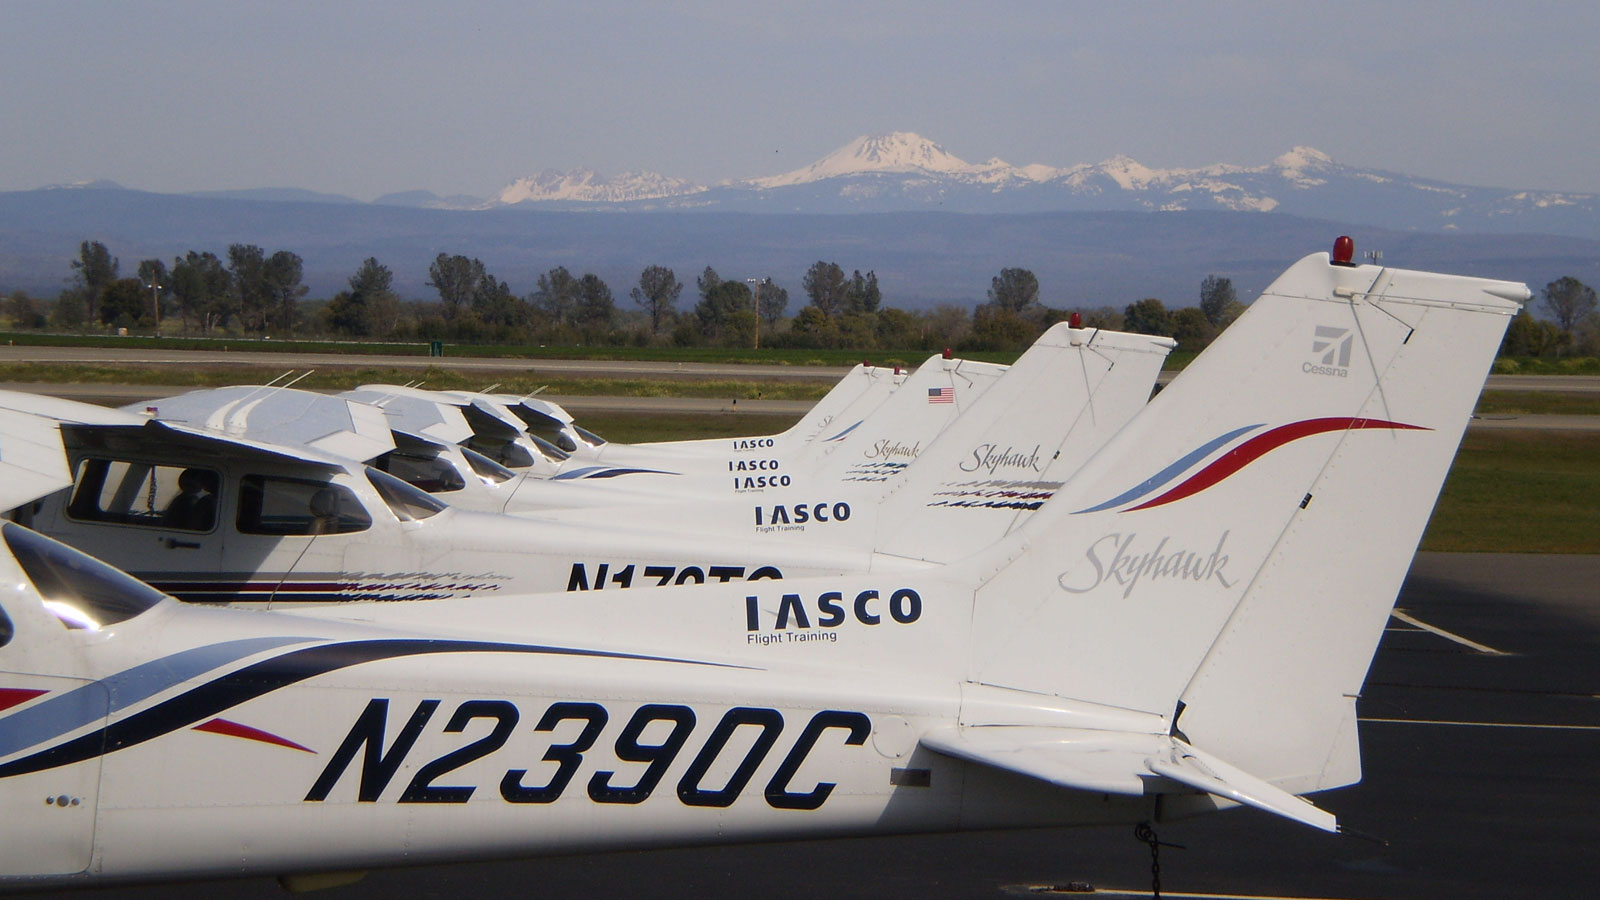 IASCO Flight Training